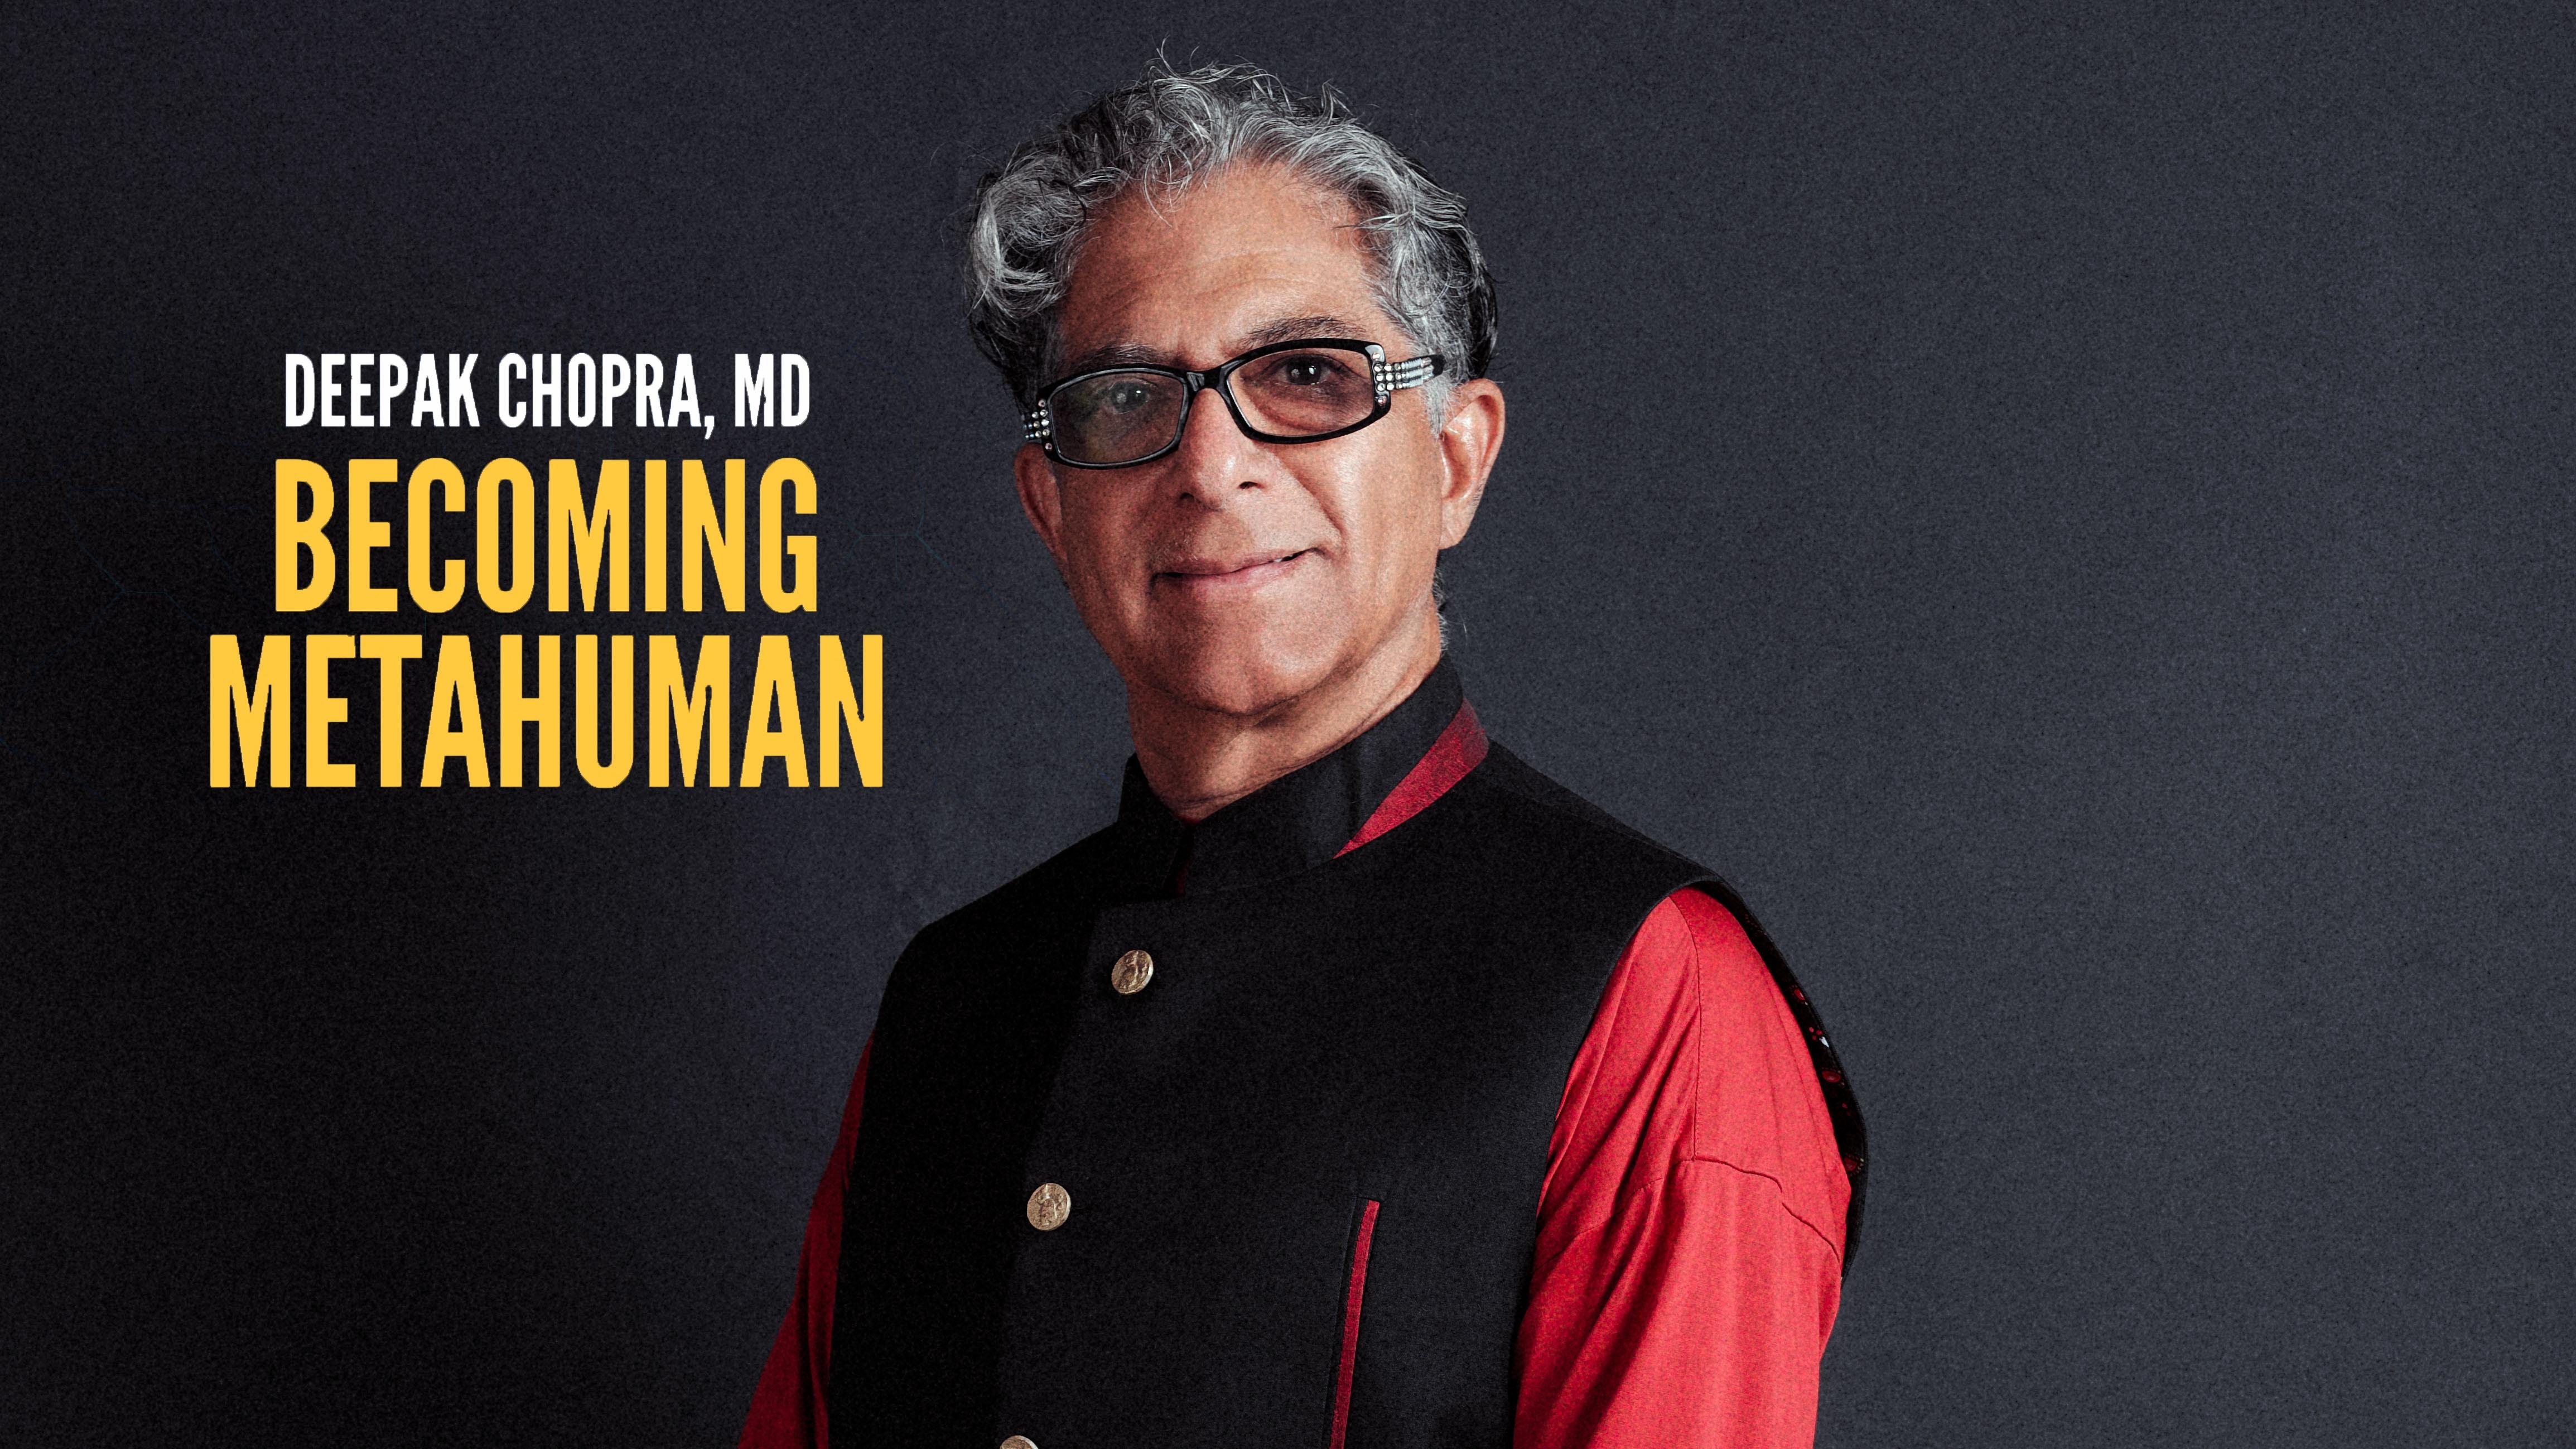 Deepak Chopra: Becoming MetaHuman